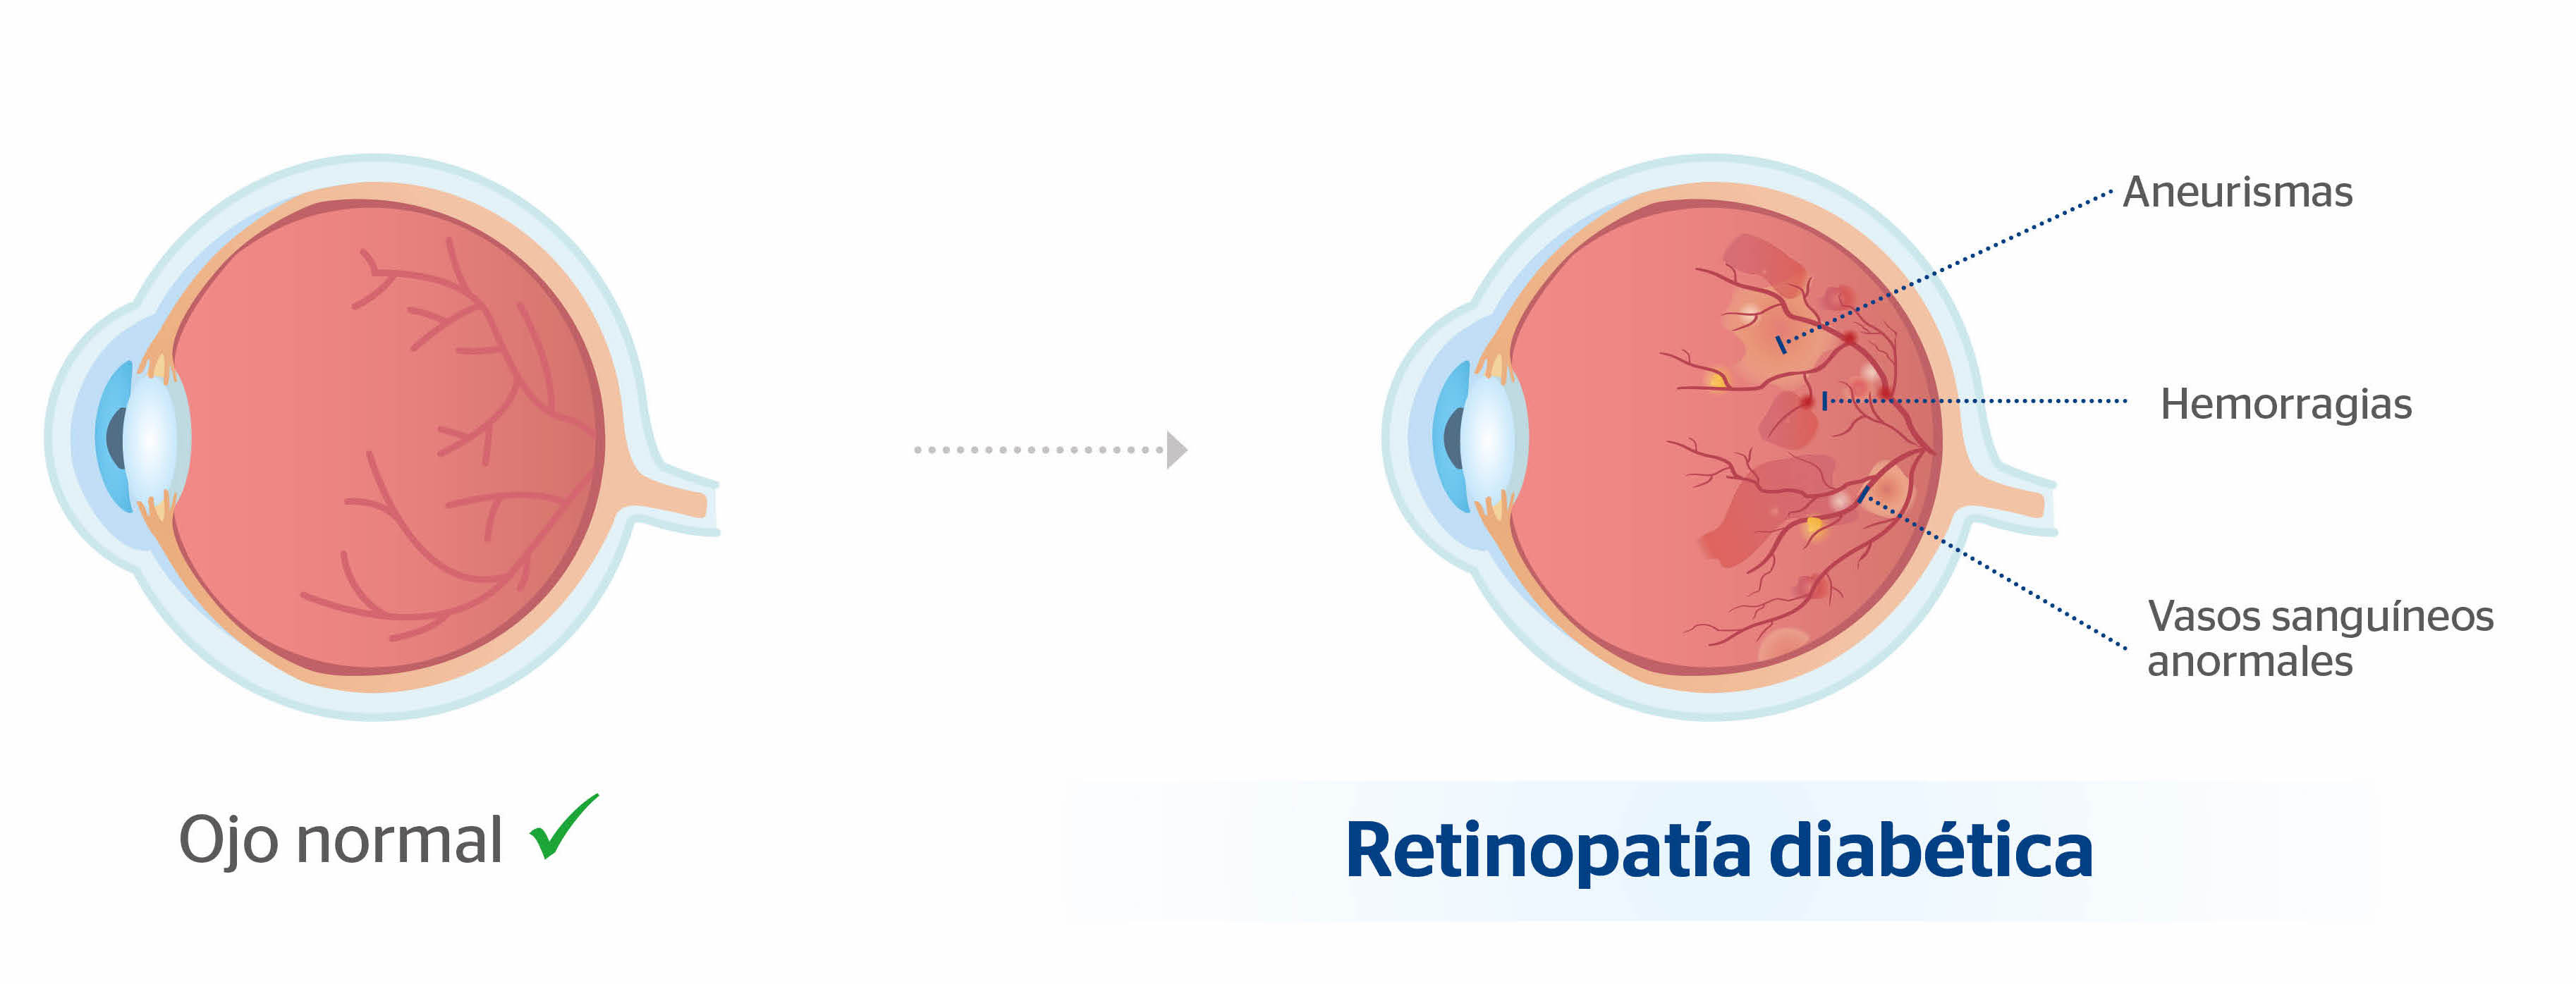 retinopatia diabetica no proliferativa tratamiento tormin-kezelés cukorbetegséggel